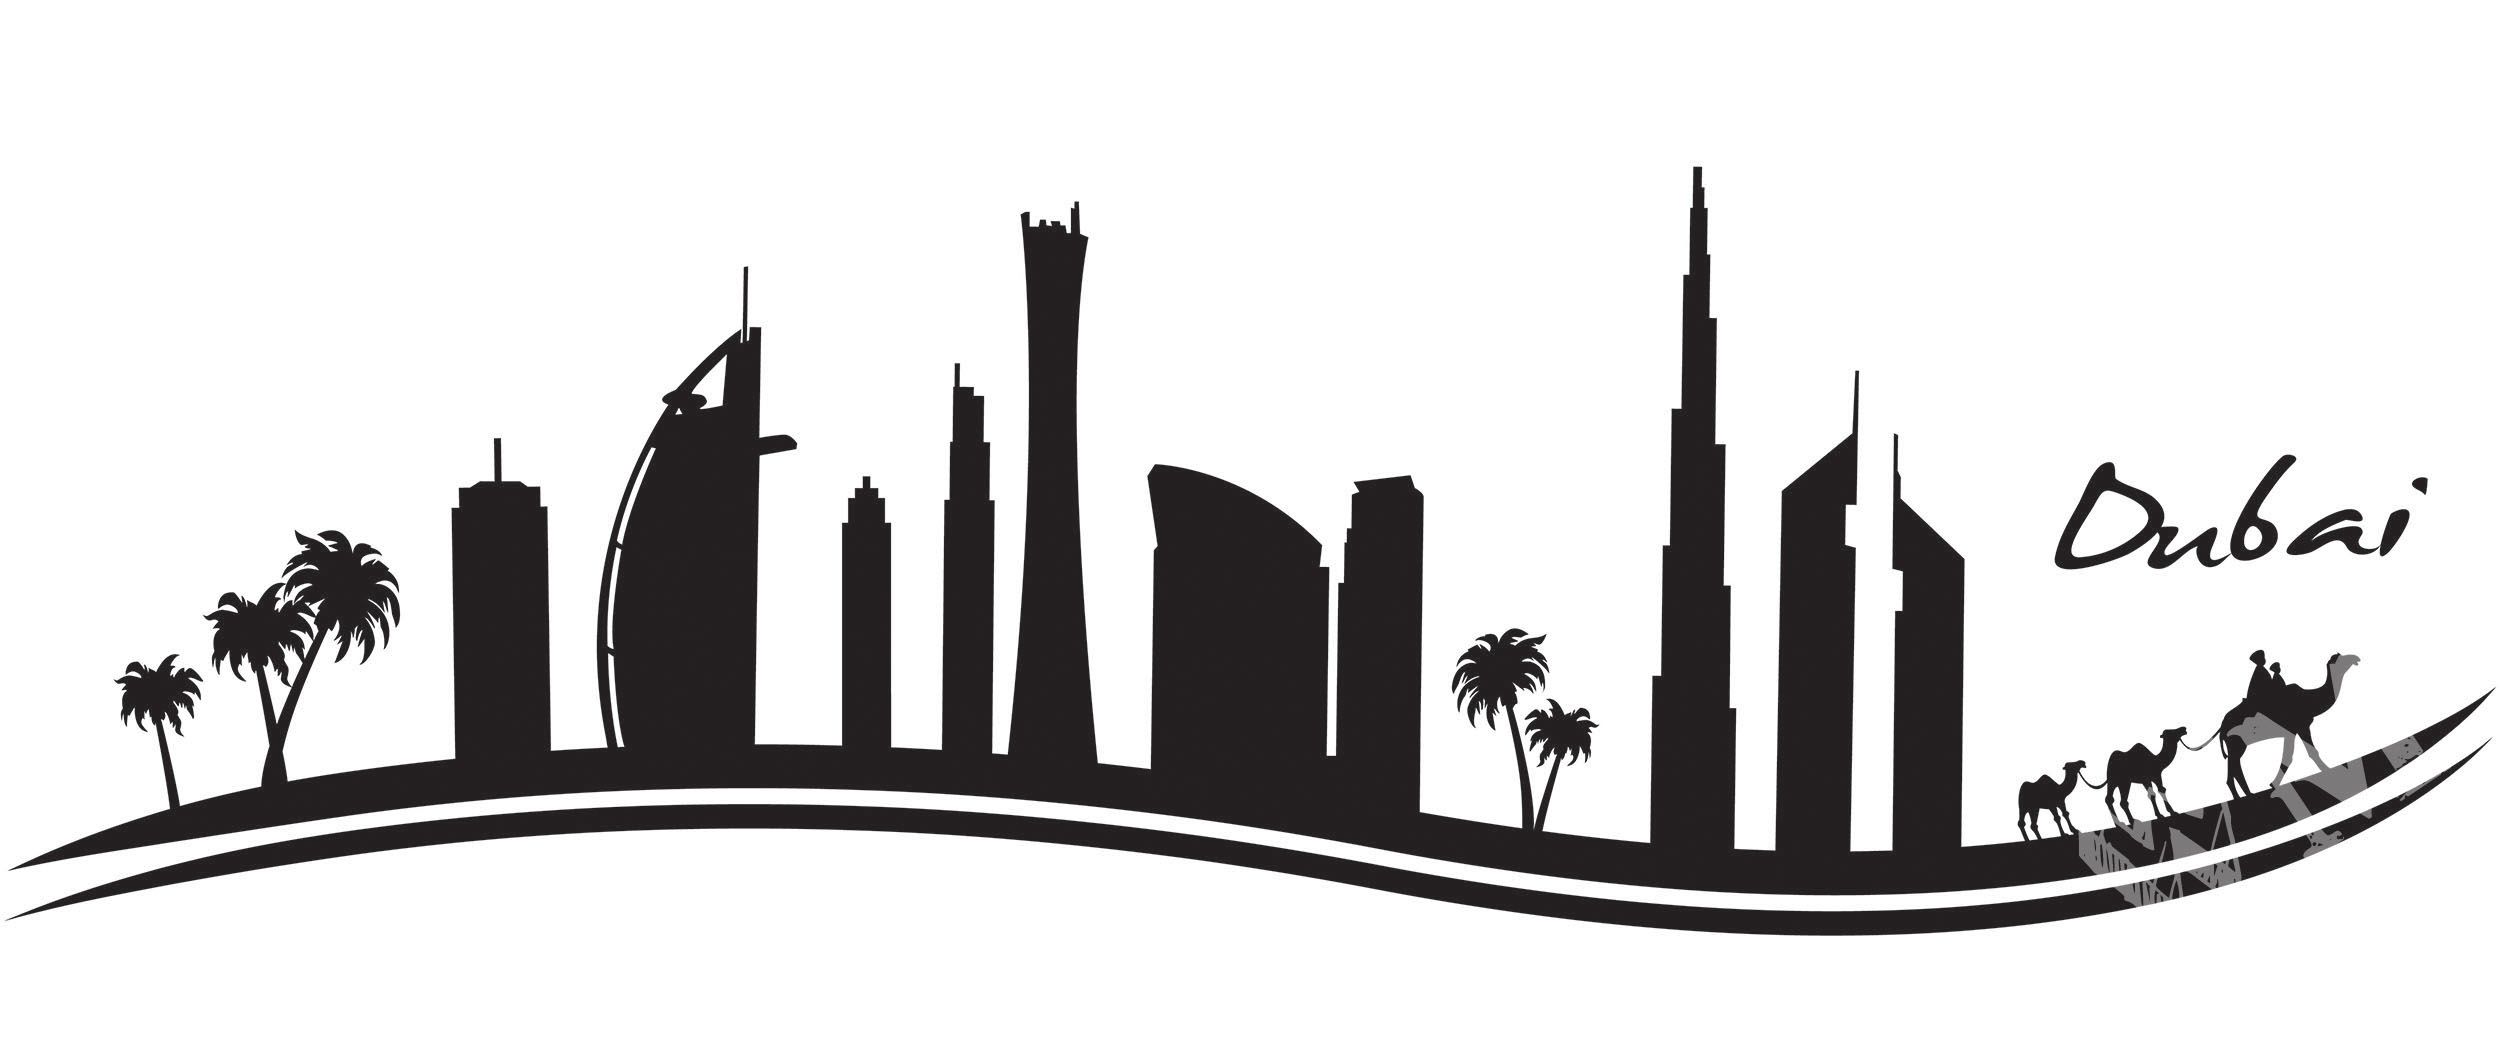 Dubai Skyline City Wall Decal | Home Decor in India by wallmantra.com